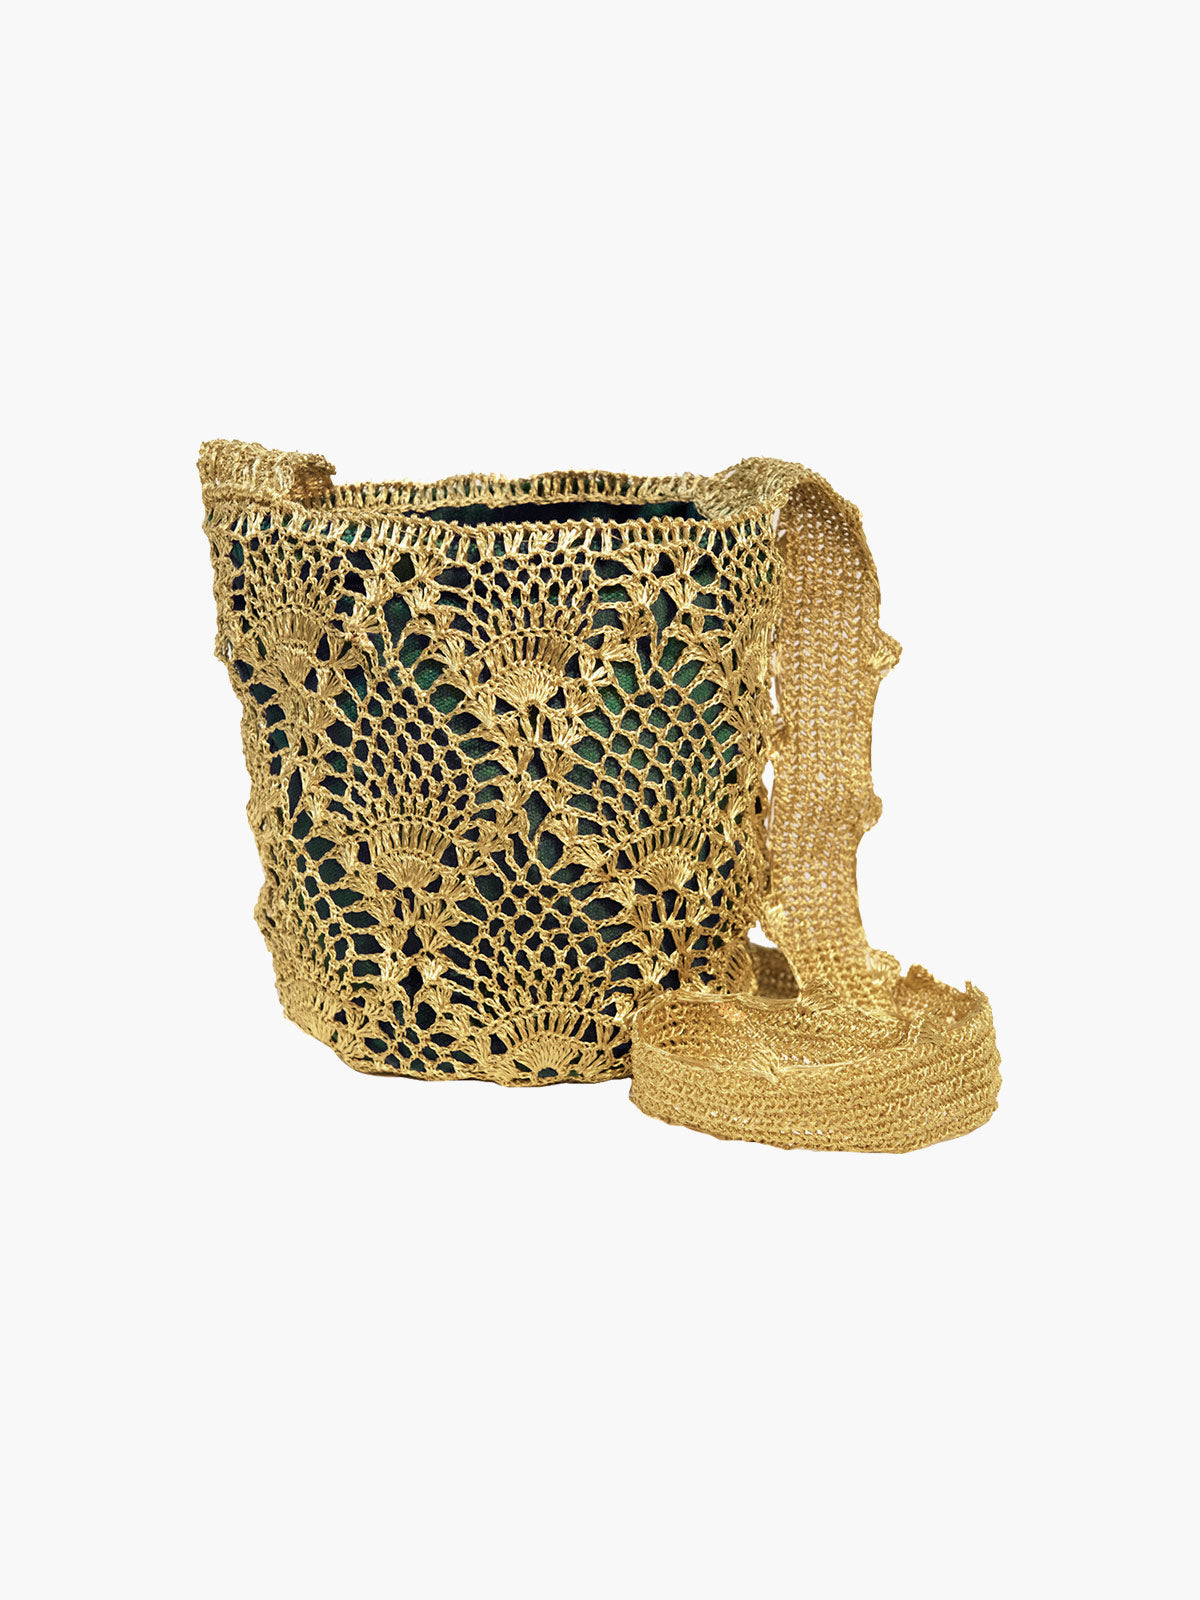 Pineapple Weave Mochila | Gold & Emerald - Fashionkind